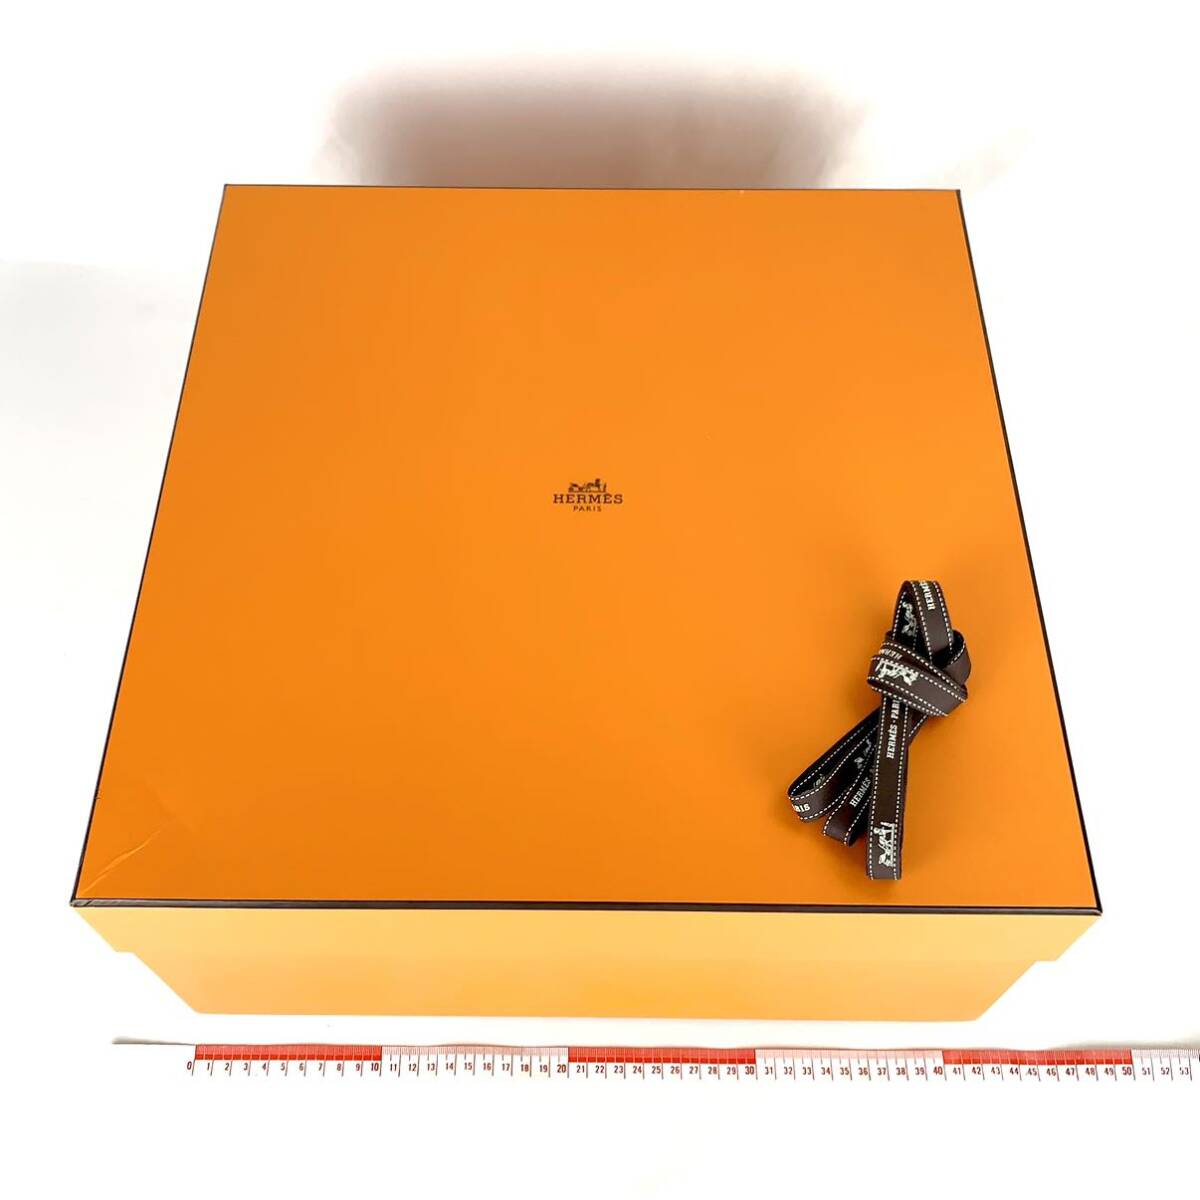 HERMES エルメス 空箱 保存袋 BOX 1312 ボックス 42×42×20大型 バッグ用 化粧箱 バーキン ケリー オレンジ リボン 緩衝材 鞄 保存箱 _画像1